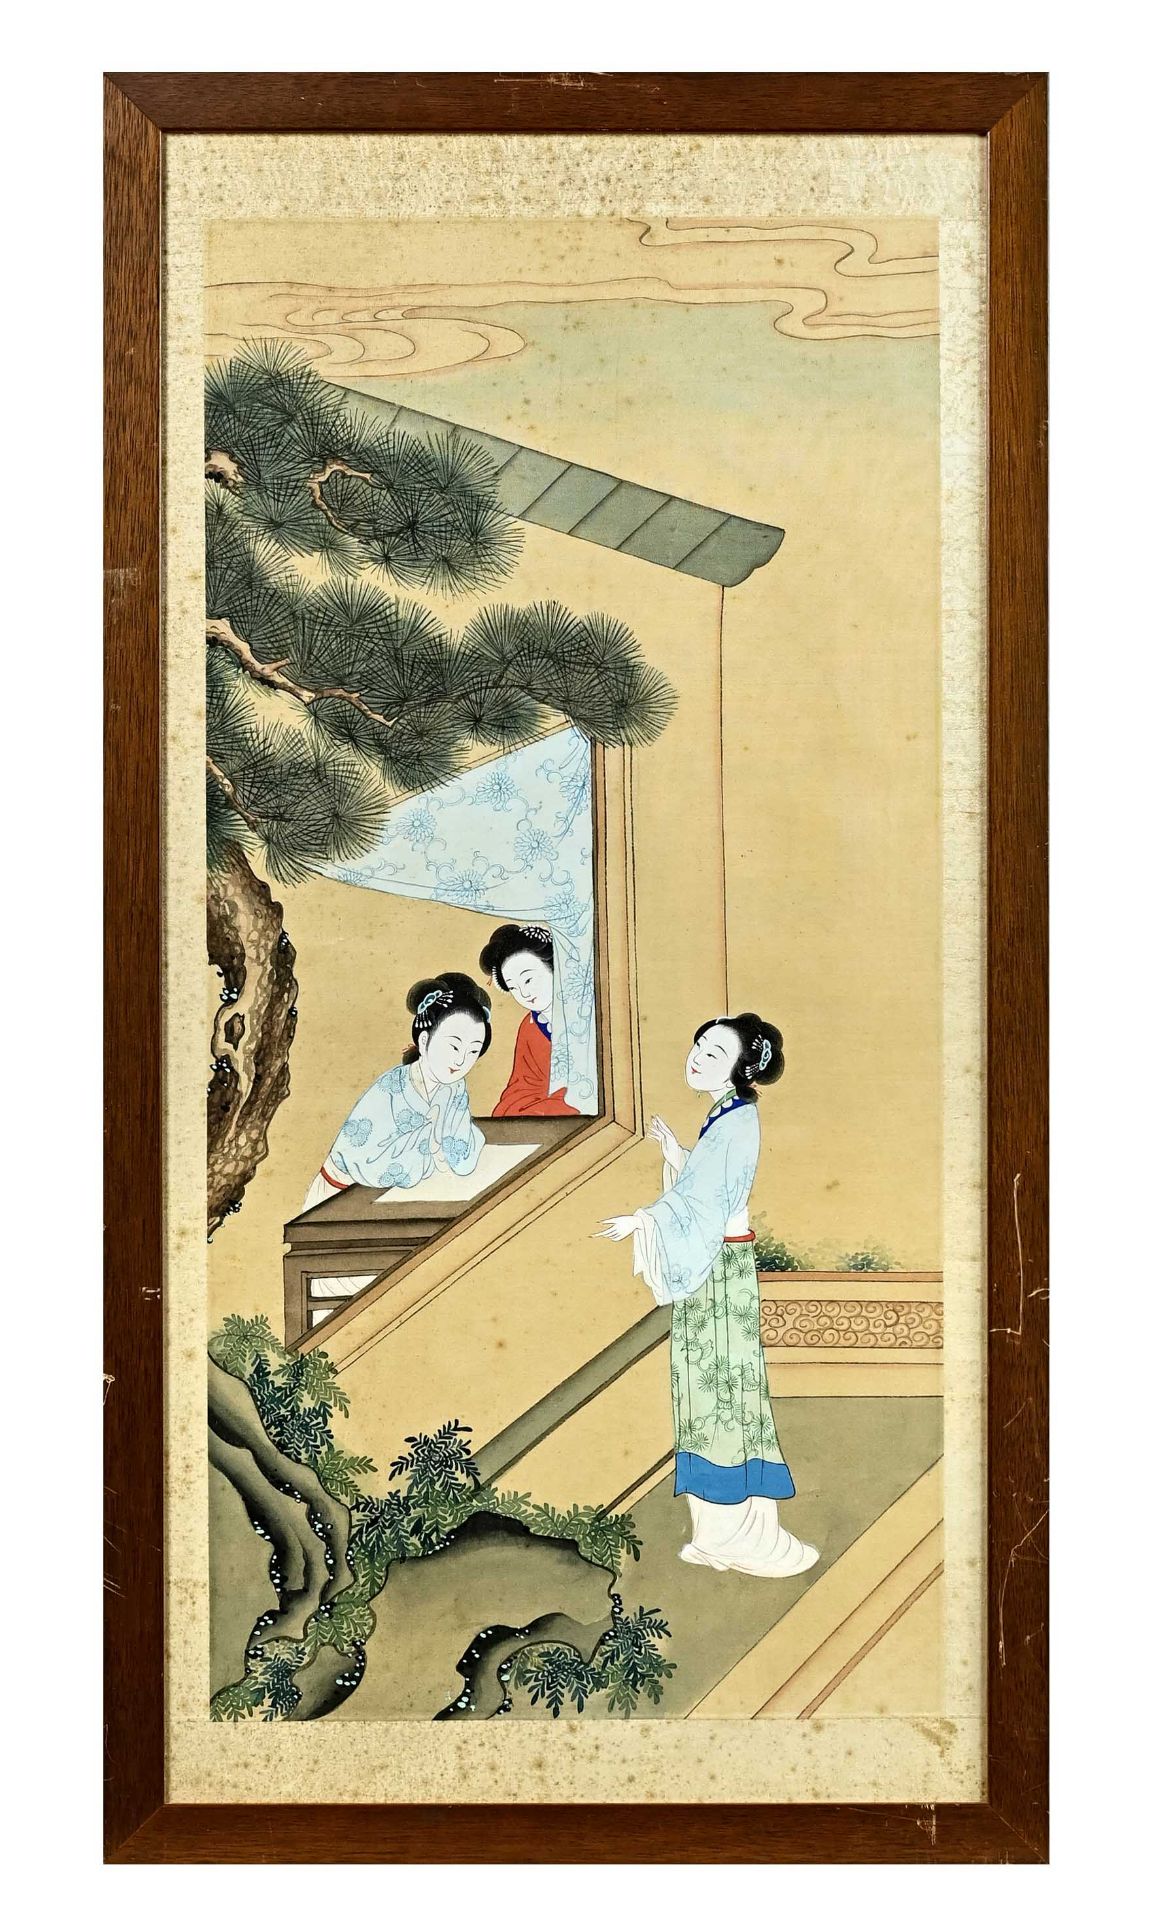 Silk picture, China around 1920, "Children at the window", mixed media on silk. 67 x 32.5 cm